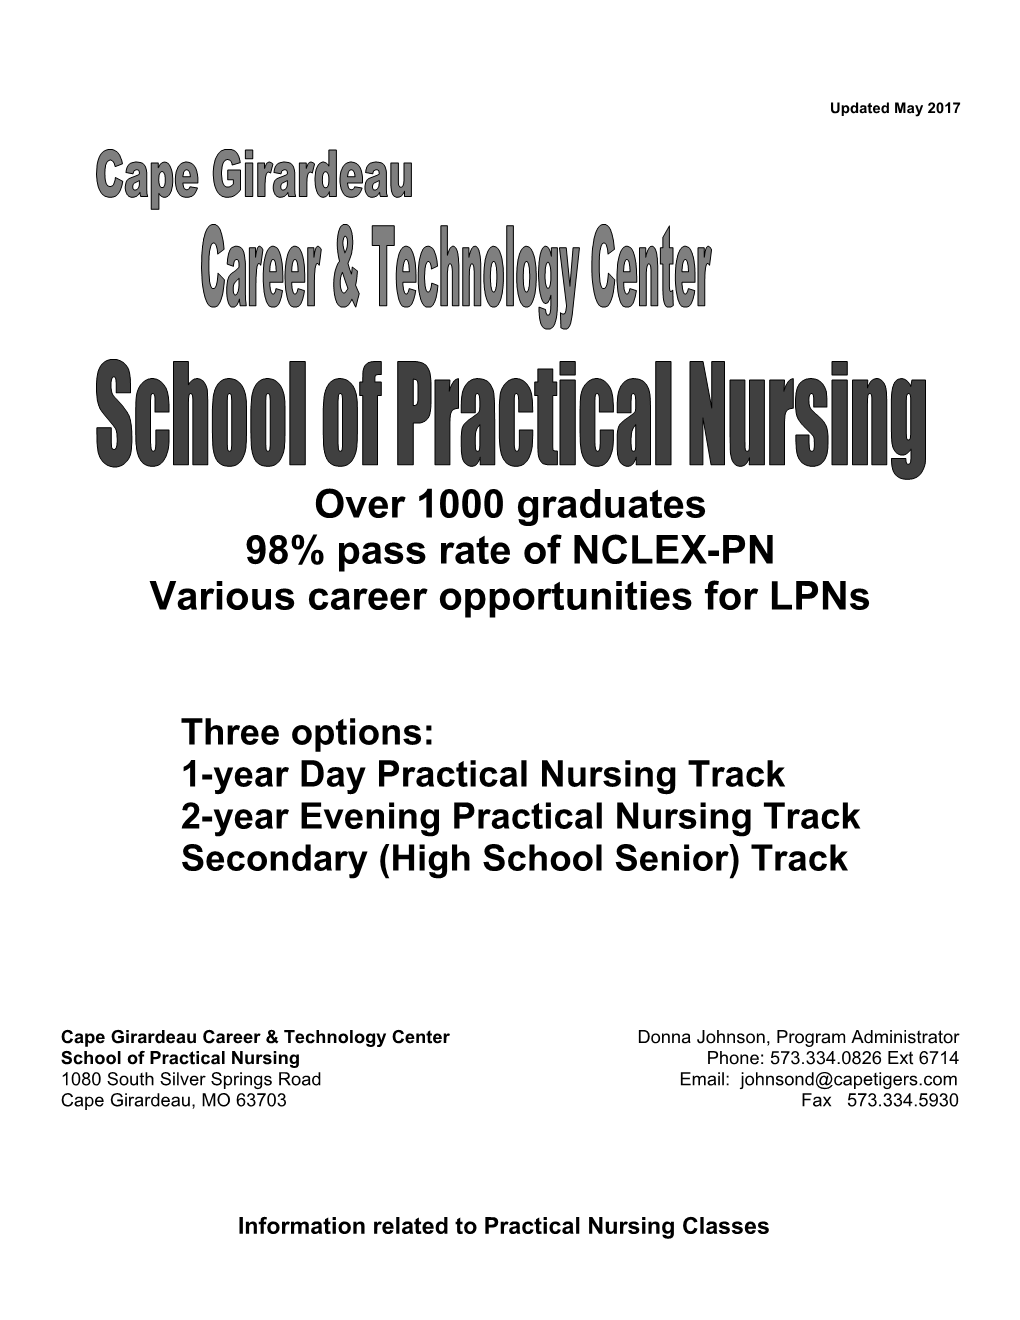 Cape Girardeau Career & Technology Center School of Practical Nursing